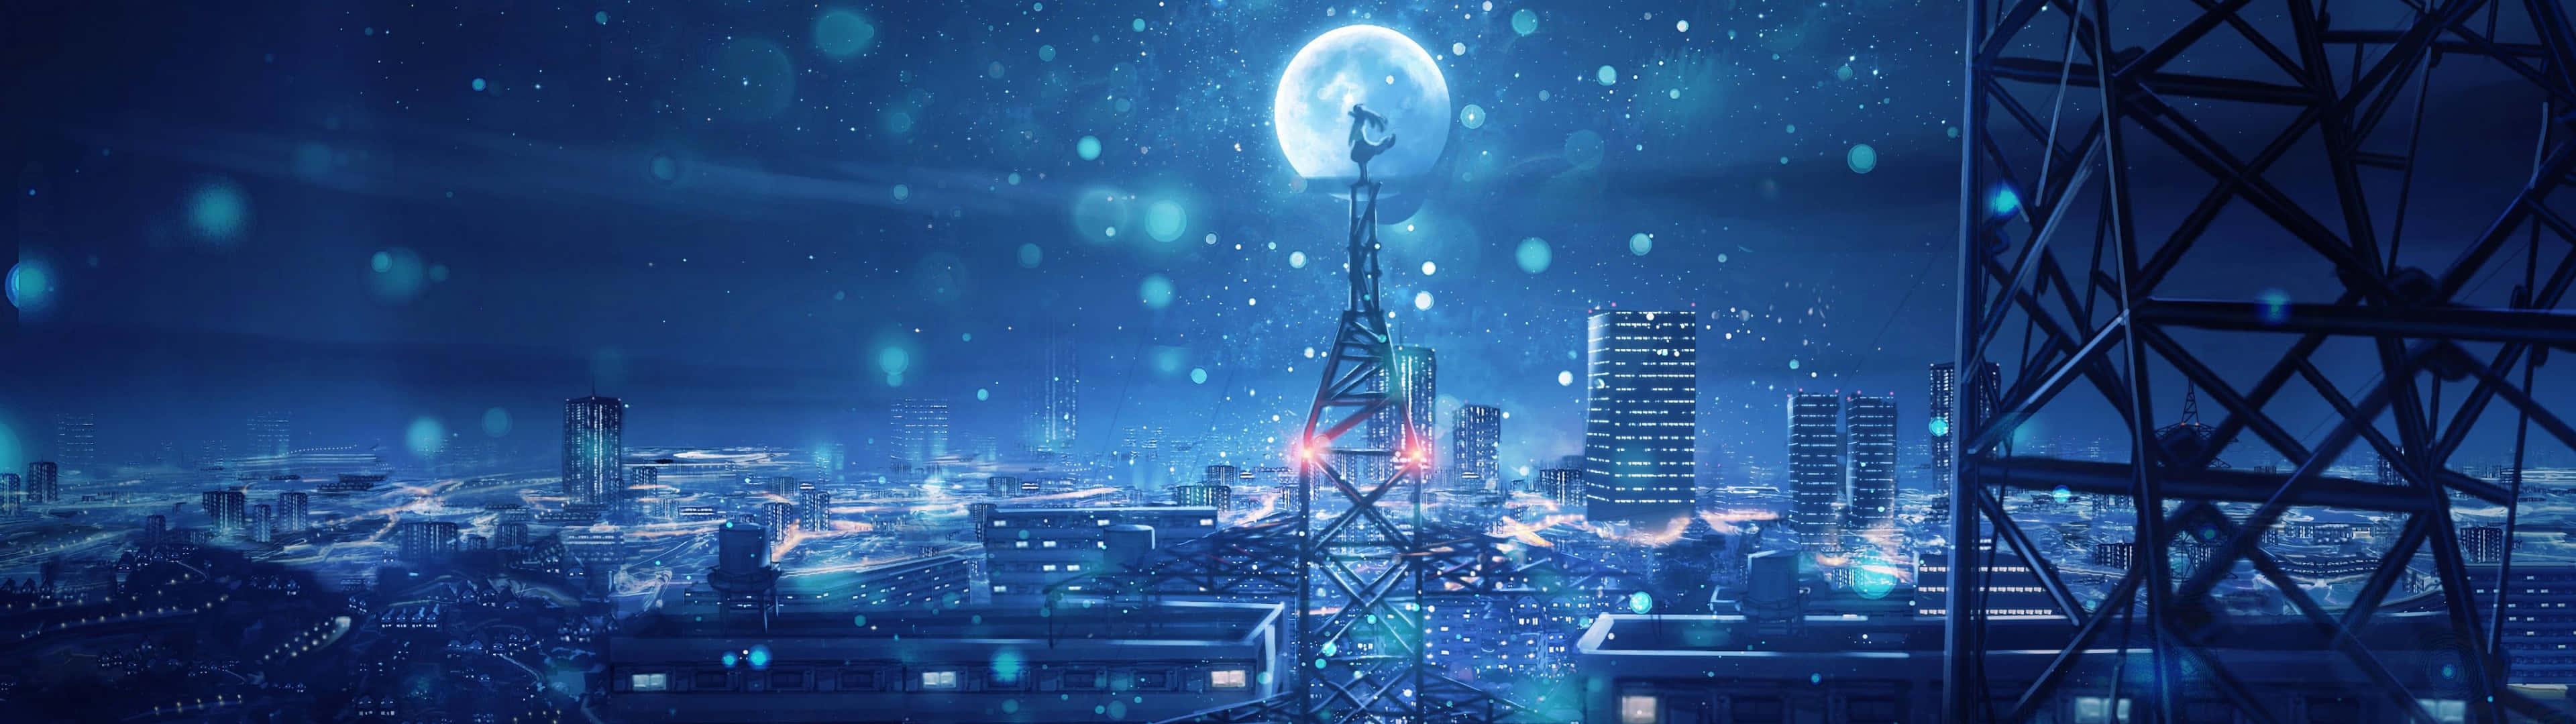 Download 3840x1080 Anime City Falling Snow Wallpaper